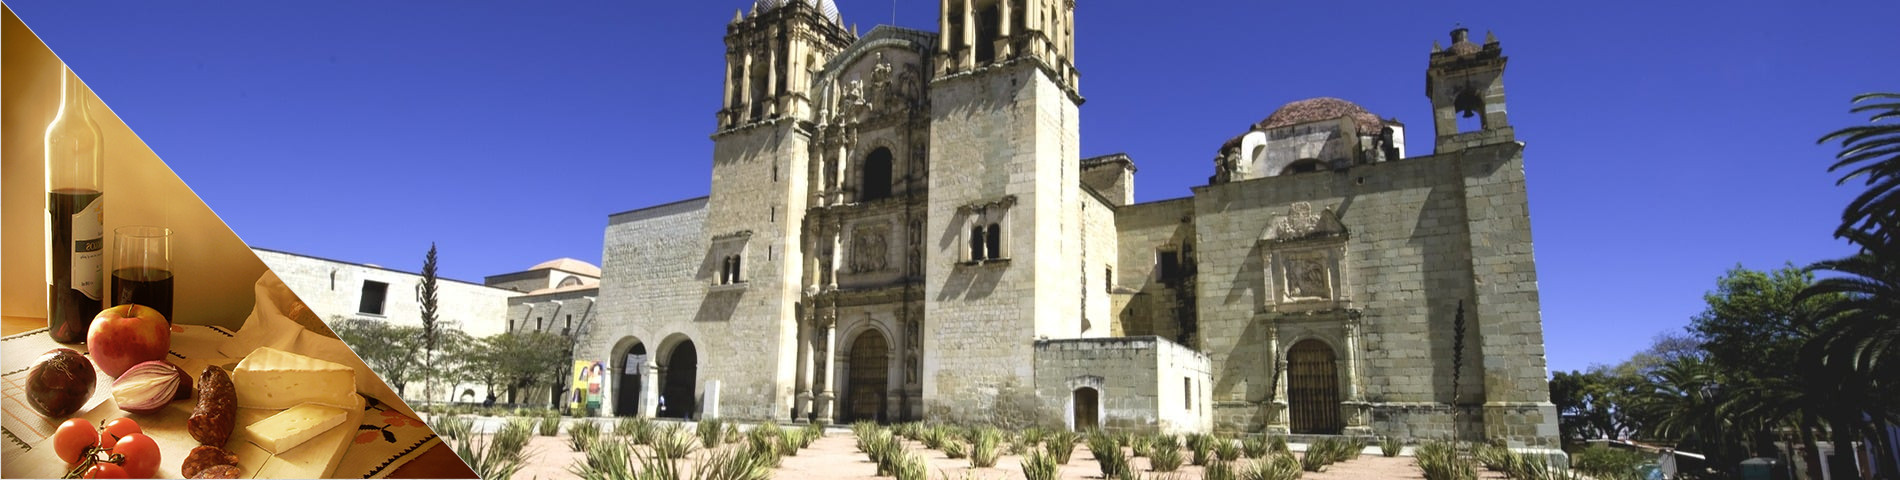 Oaxaca - Spanska & kultur